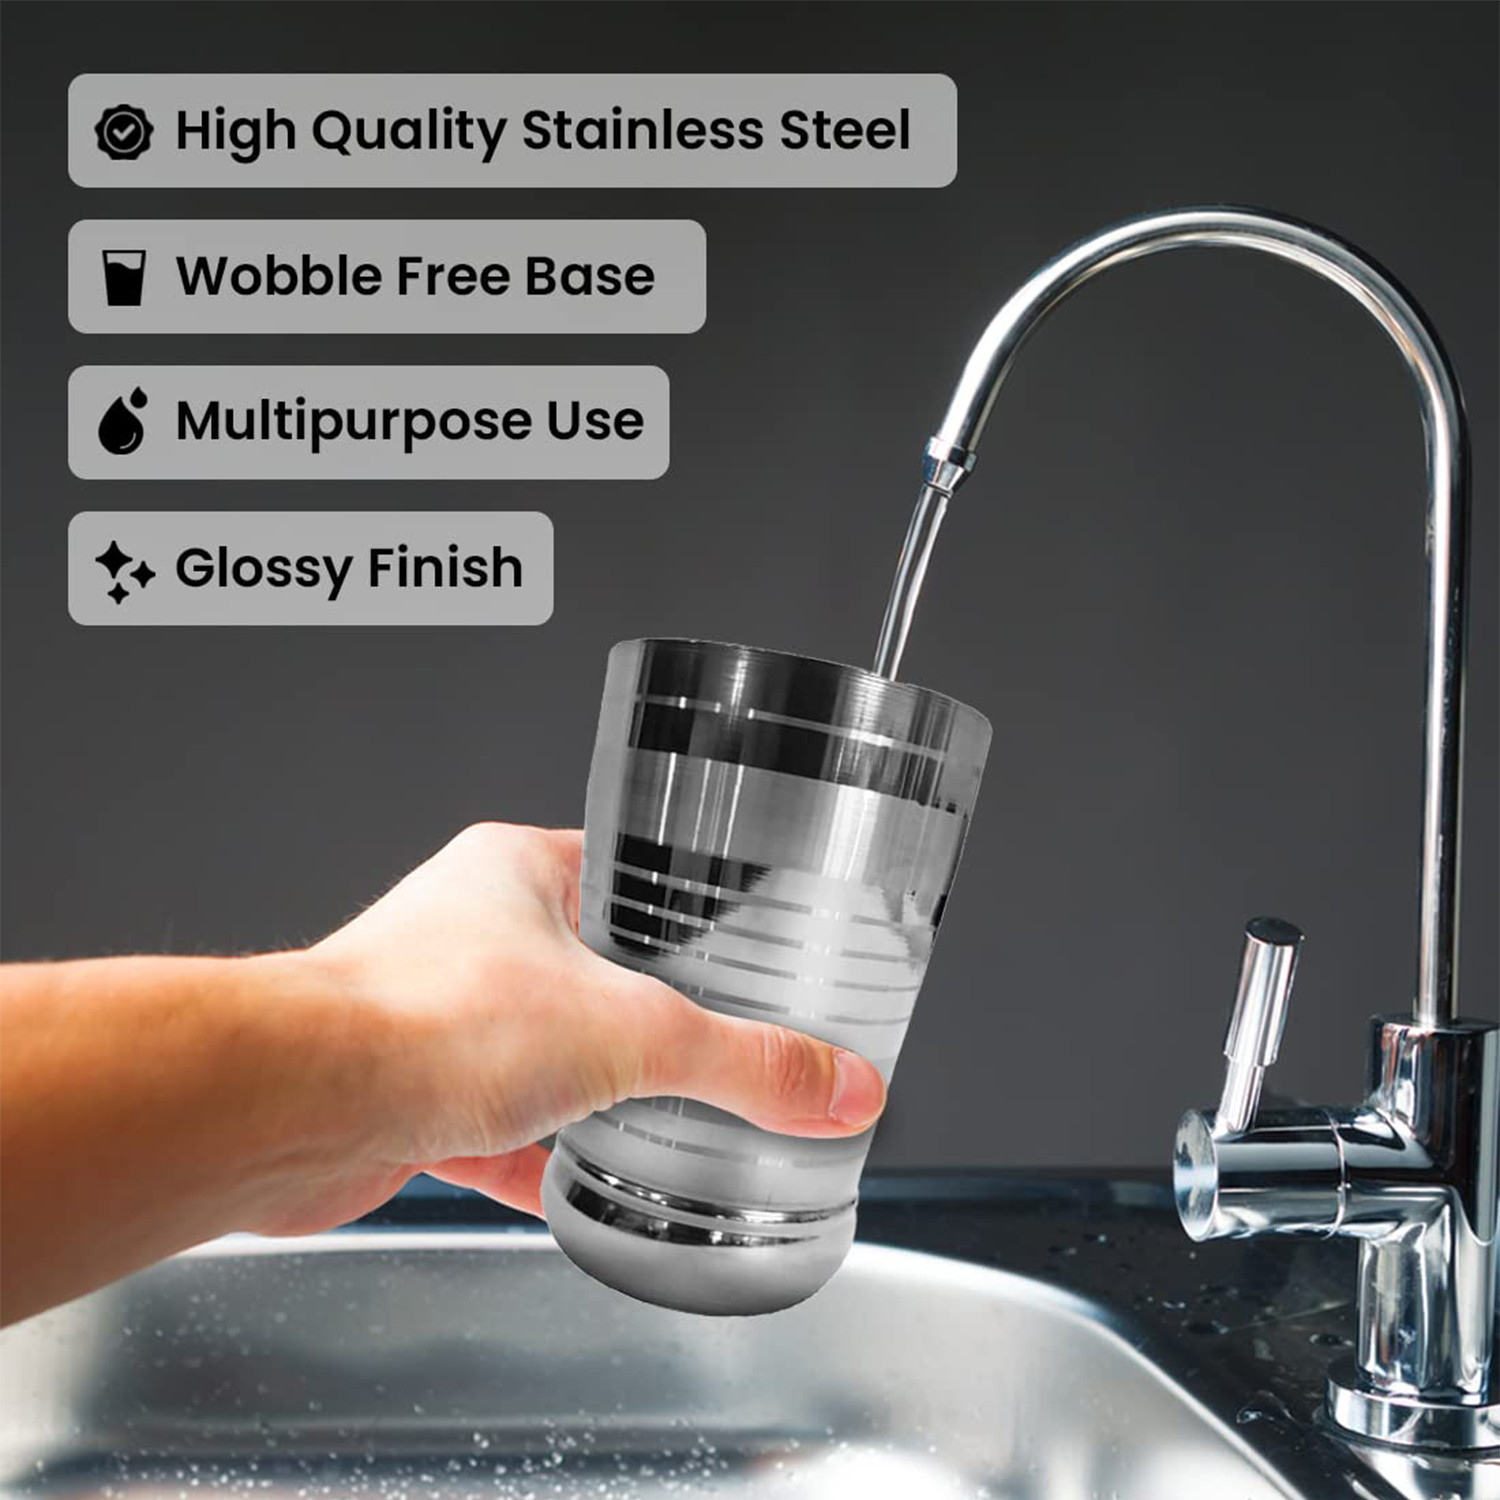 Kuber Stainless Steel Glass Set | Wobble Free Base, Durable | Multipurpose, Elegant Design & Wide Rim | Easy to Clean & Store | Steel Glass Set 6